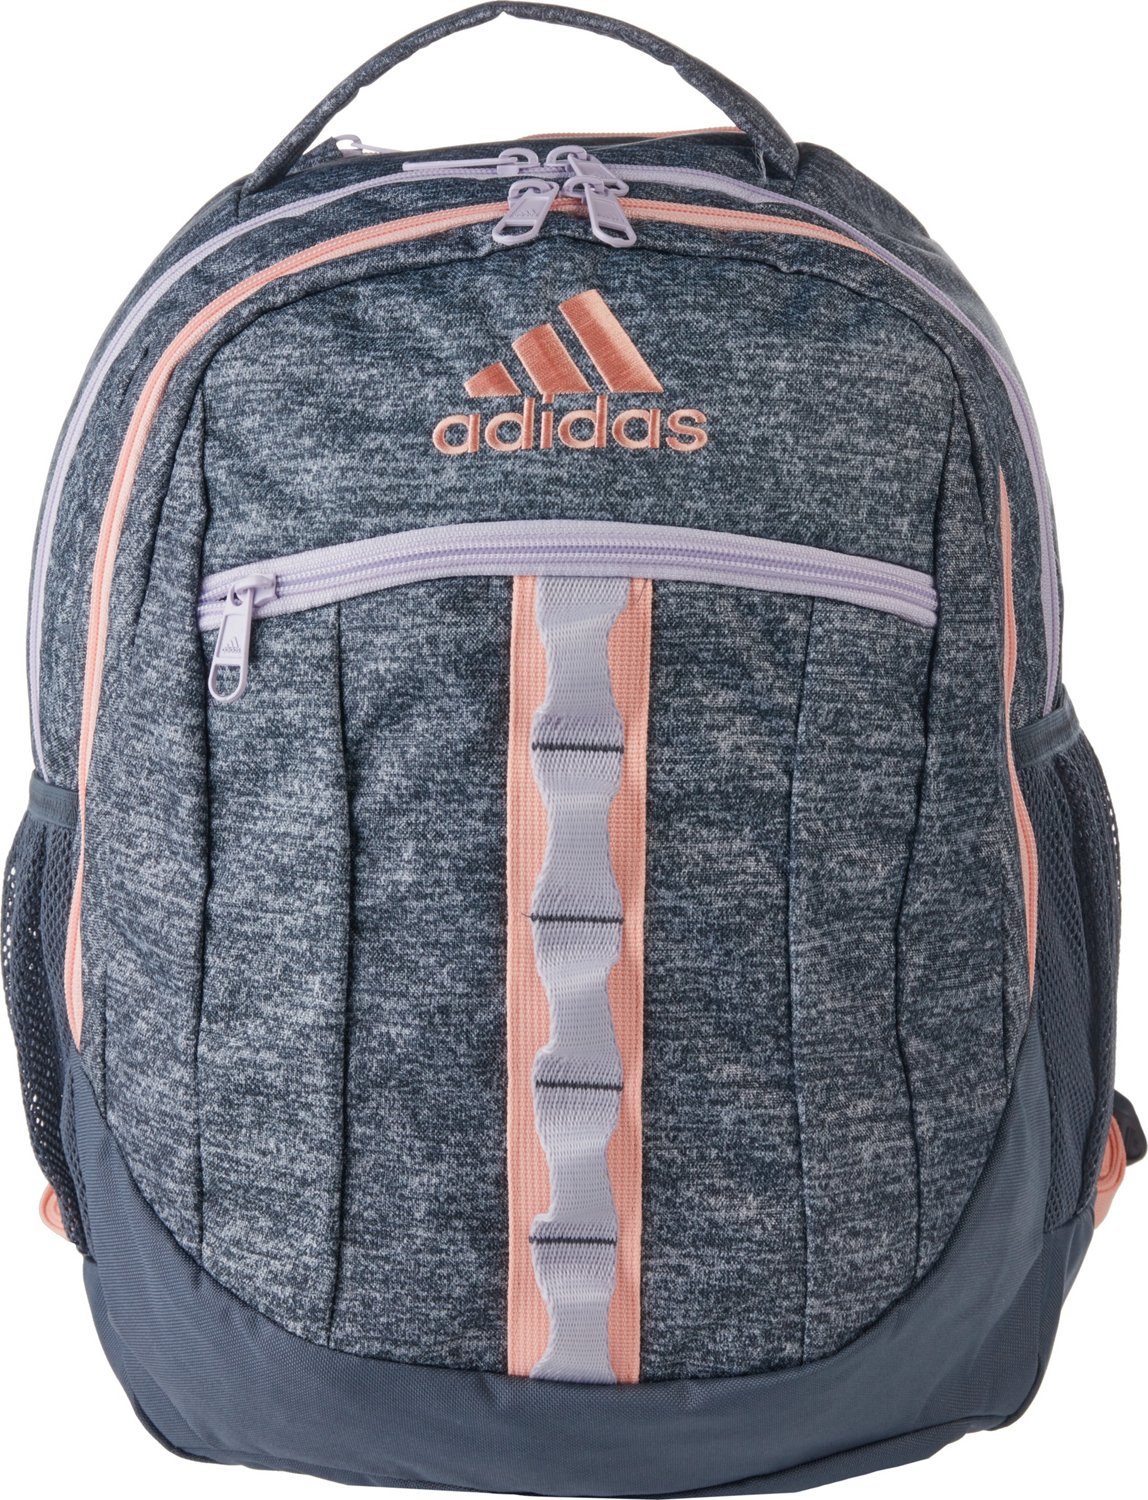 Adidas Stratton II Backpack Jersey Onix 